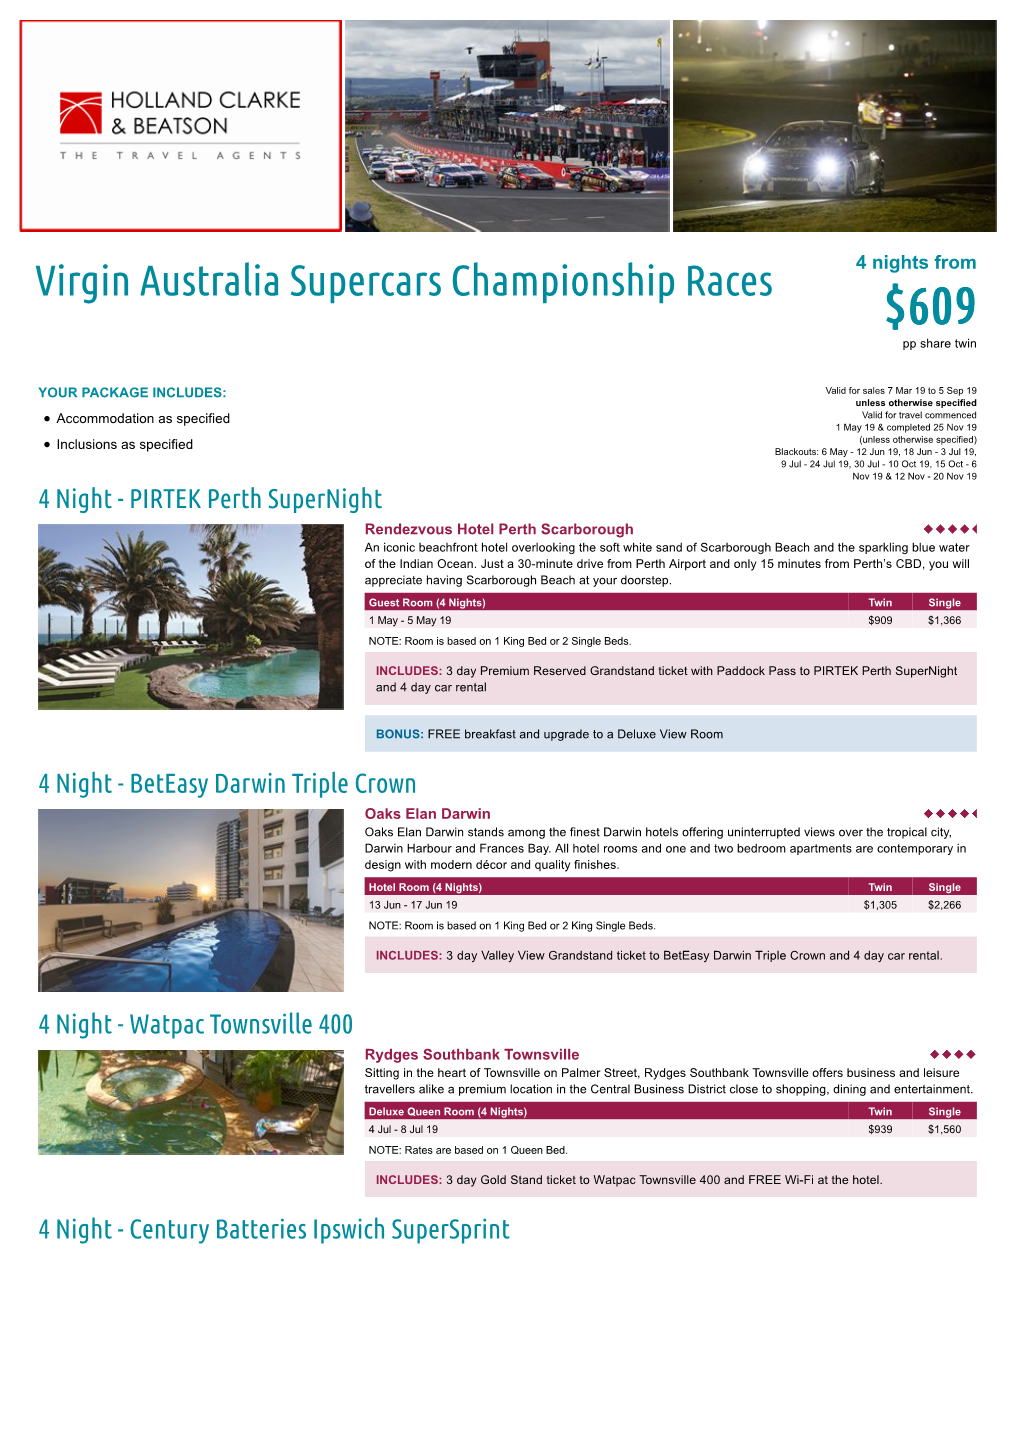 Virgin Australia Supercars Championship Races $609 Pp Share Twin